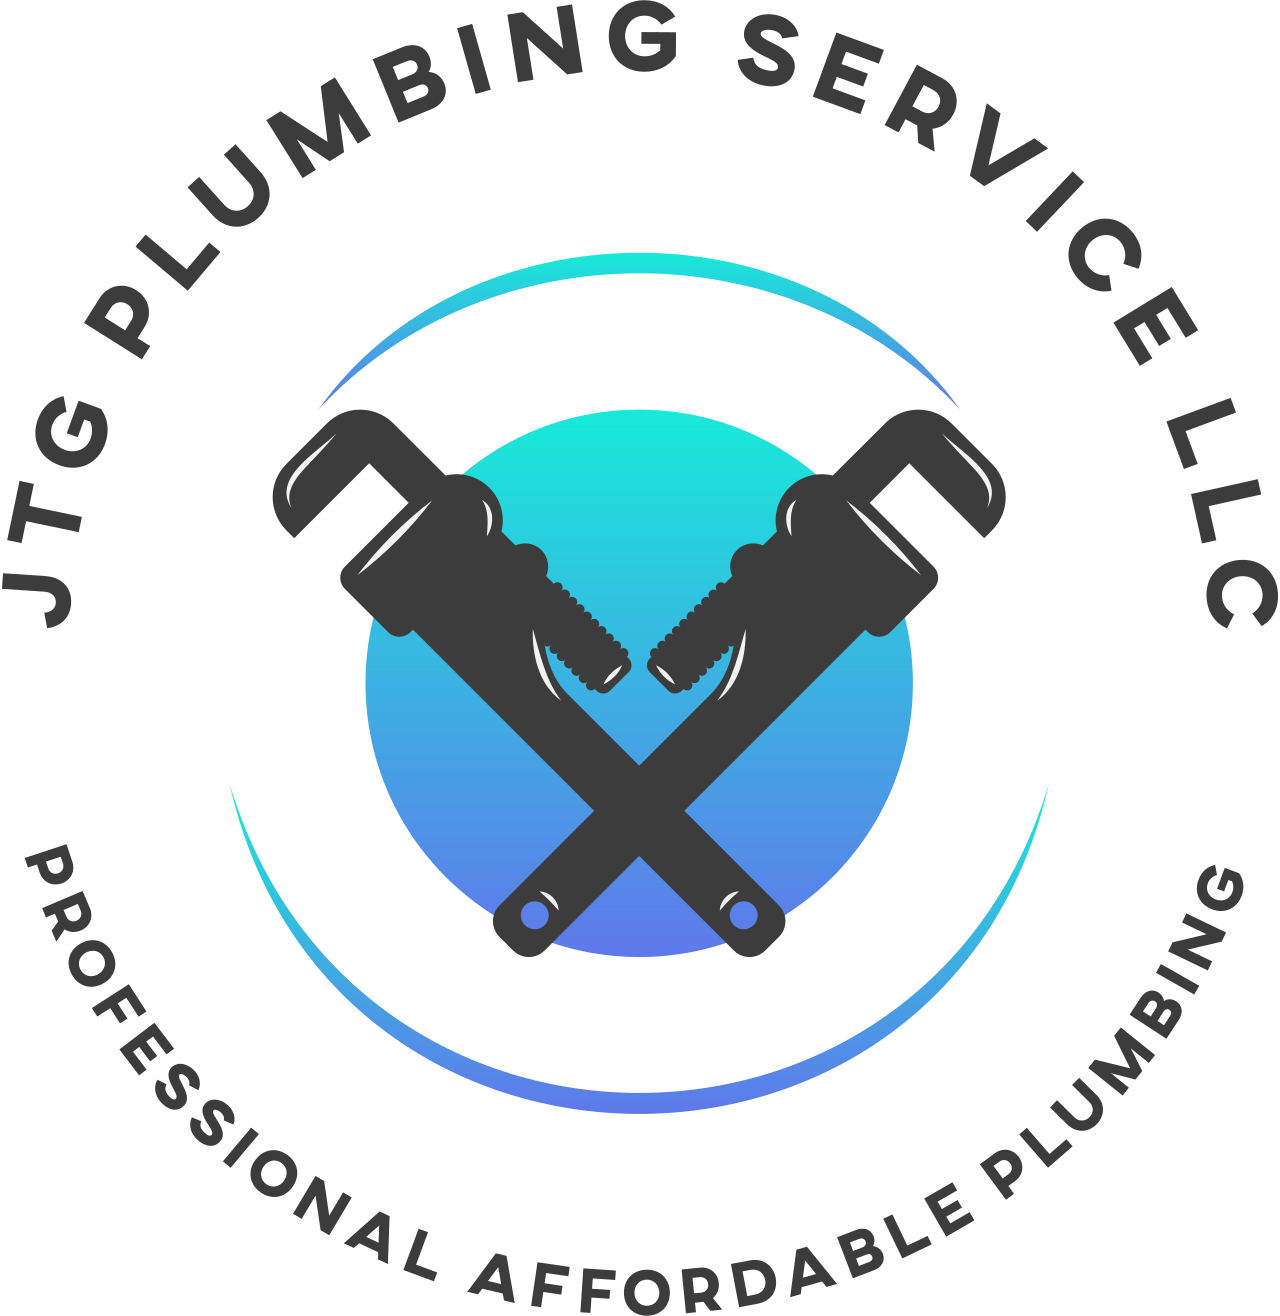 JTG Plumbing Service LLC's web page